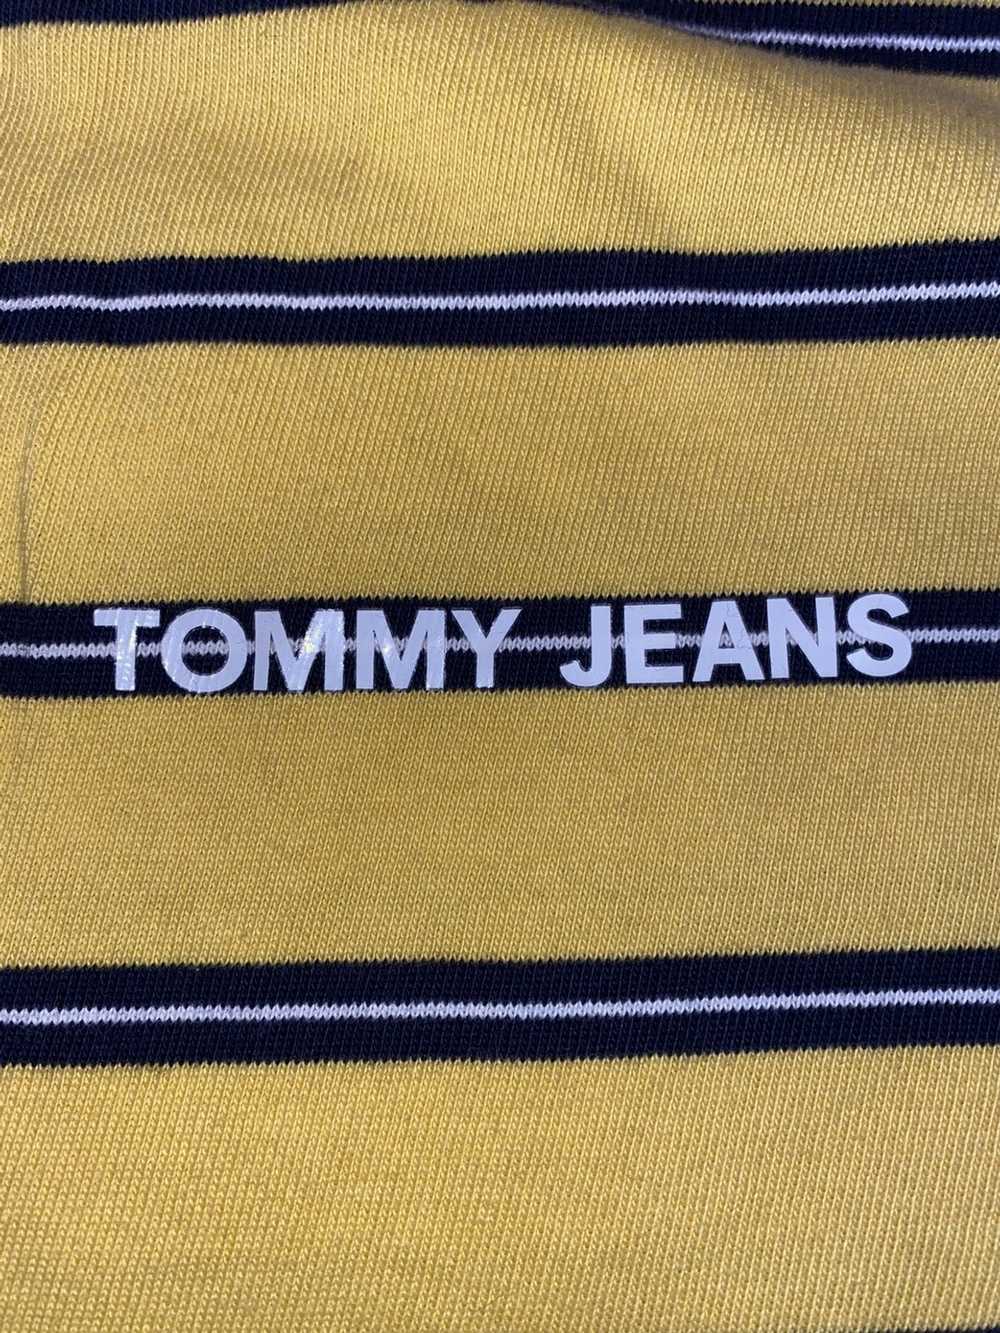 Tommy Jeans Vintage Tommy Jeans Shirt - image 3